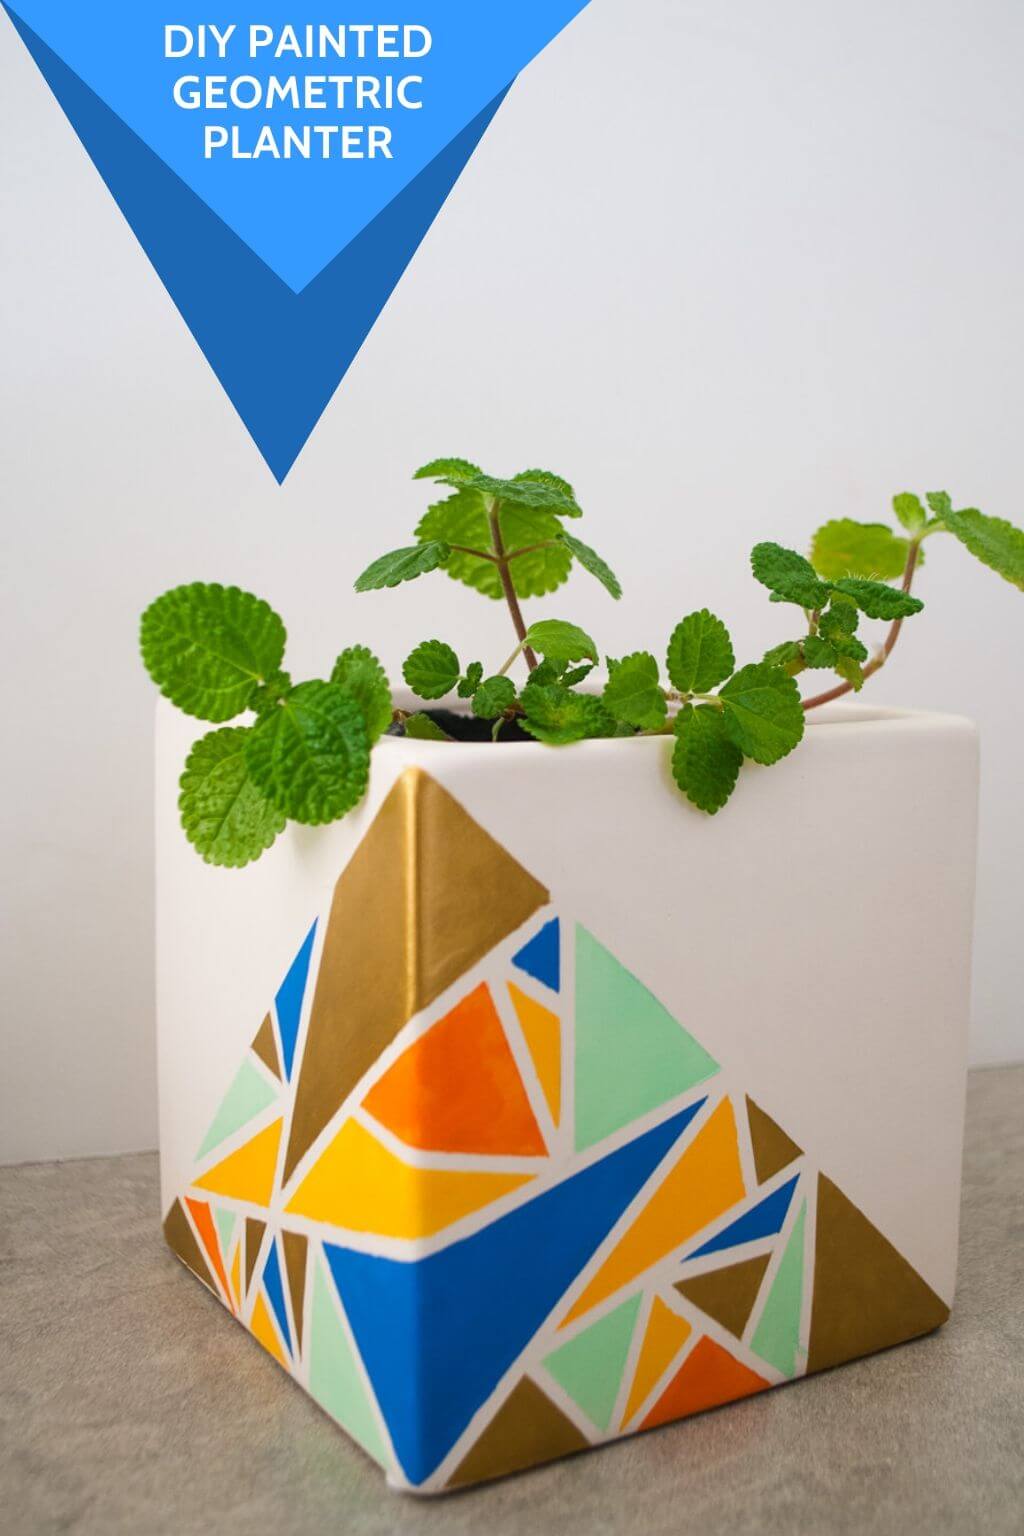 Mini hand Stencilled Ceramic Pot Planter Blue Square Art Deco Geometric Pattern